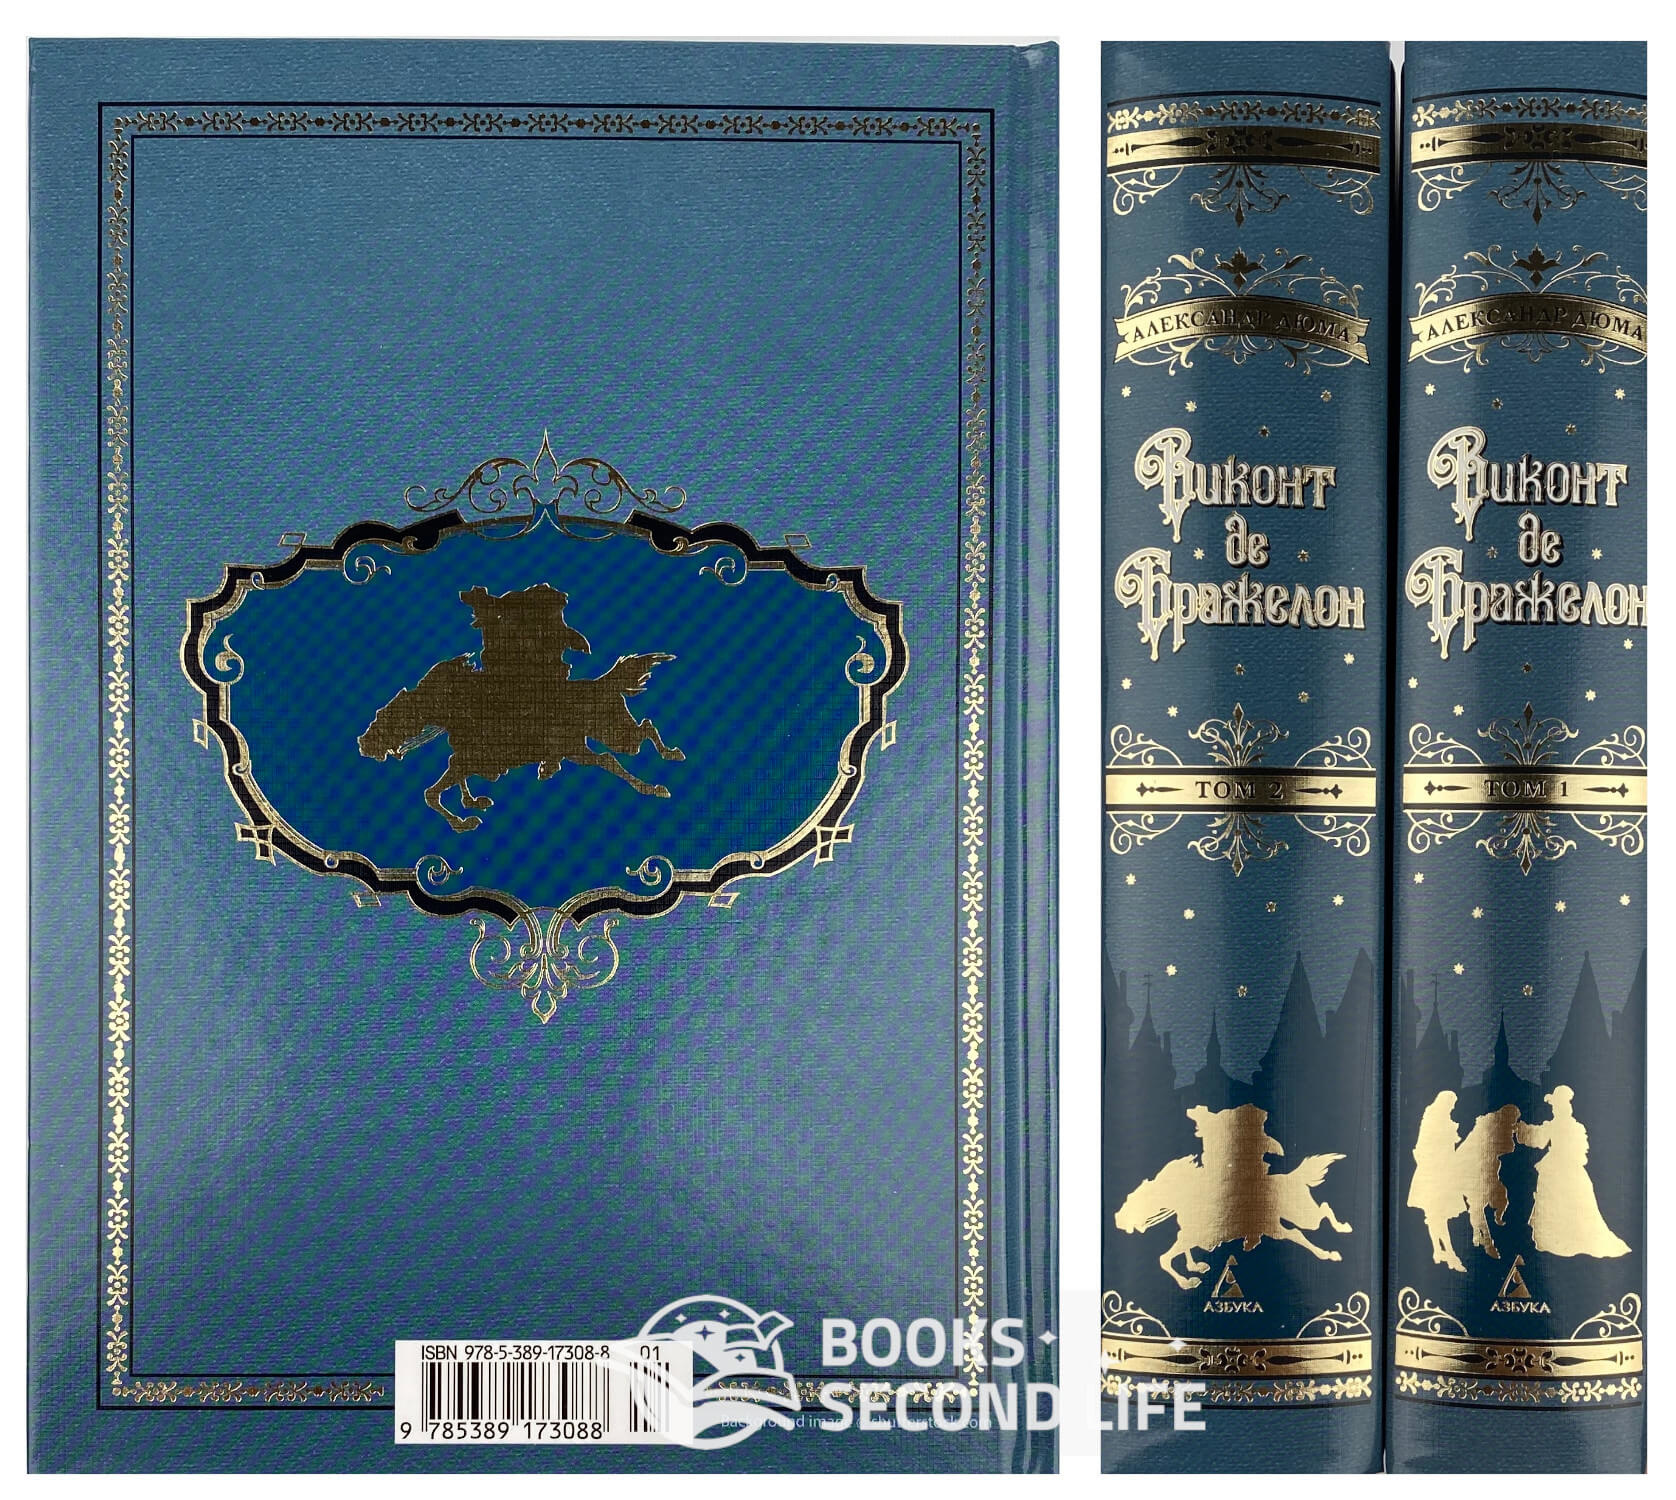 Виконт де Бражелон (комплект из двух книг). Автор — Олександр Дюма. 